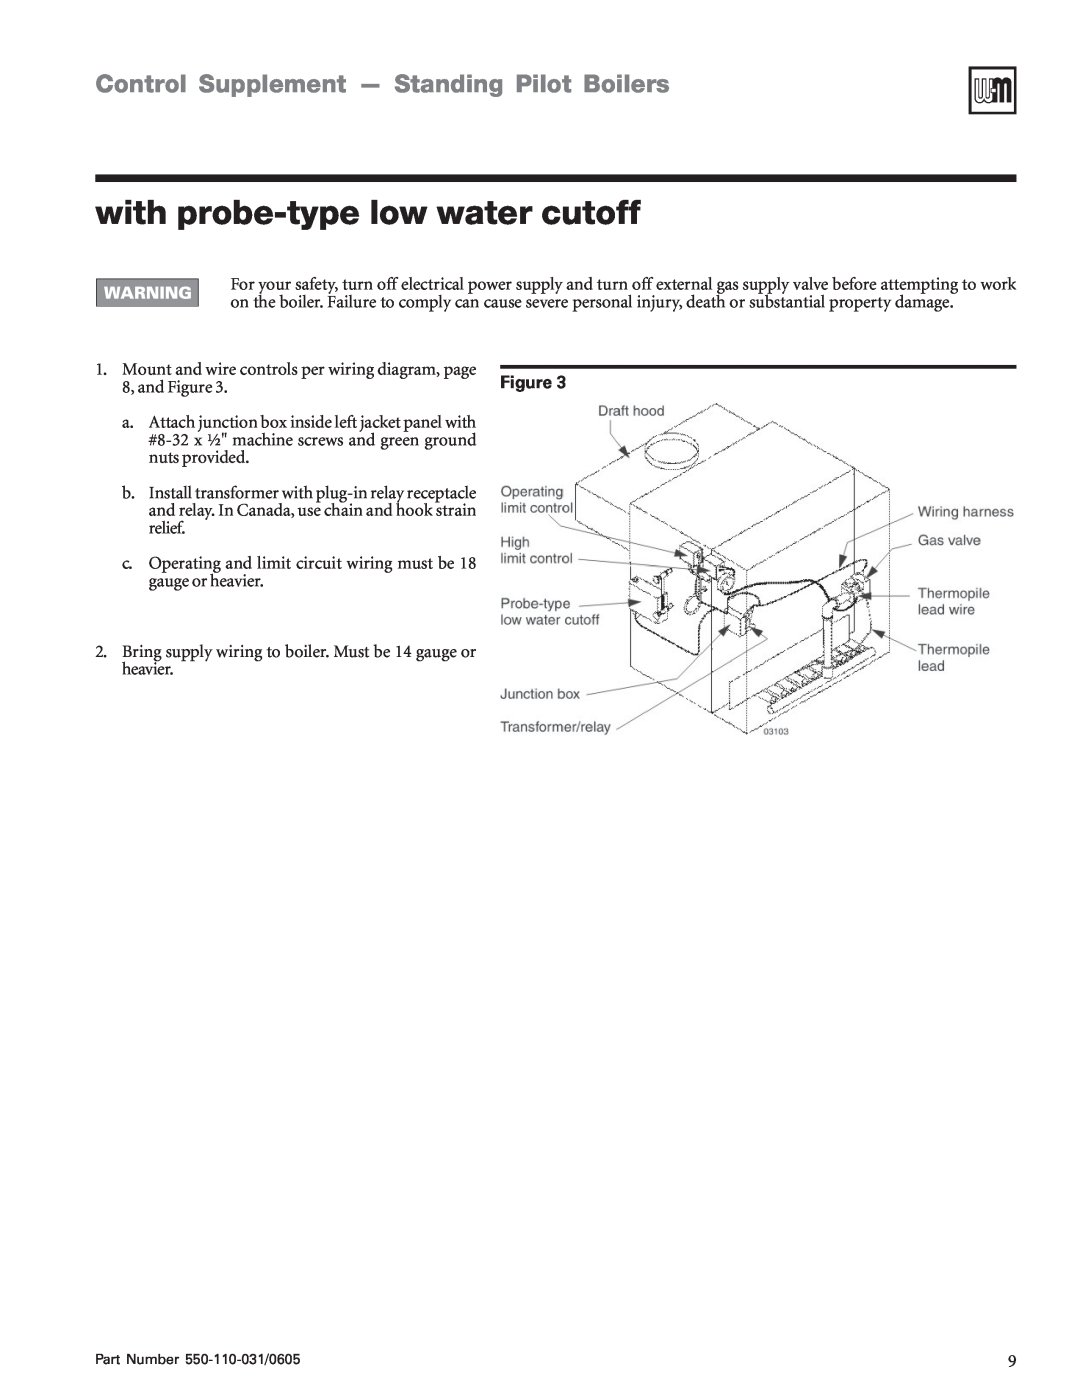 Weil-McLain PFG-6, EGH-95, EGH-85 manual with probe-typelow water cutoff, Control Supplement - Standing Pilot Boilers 